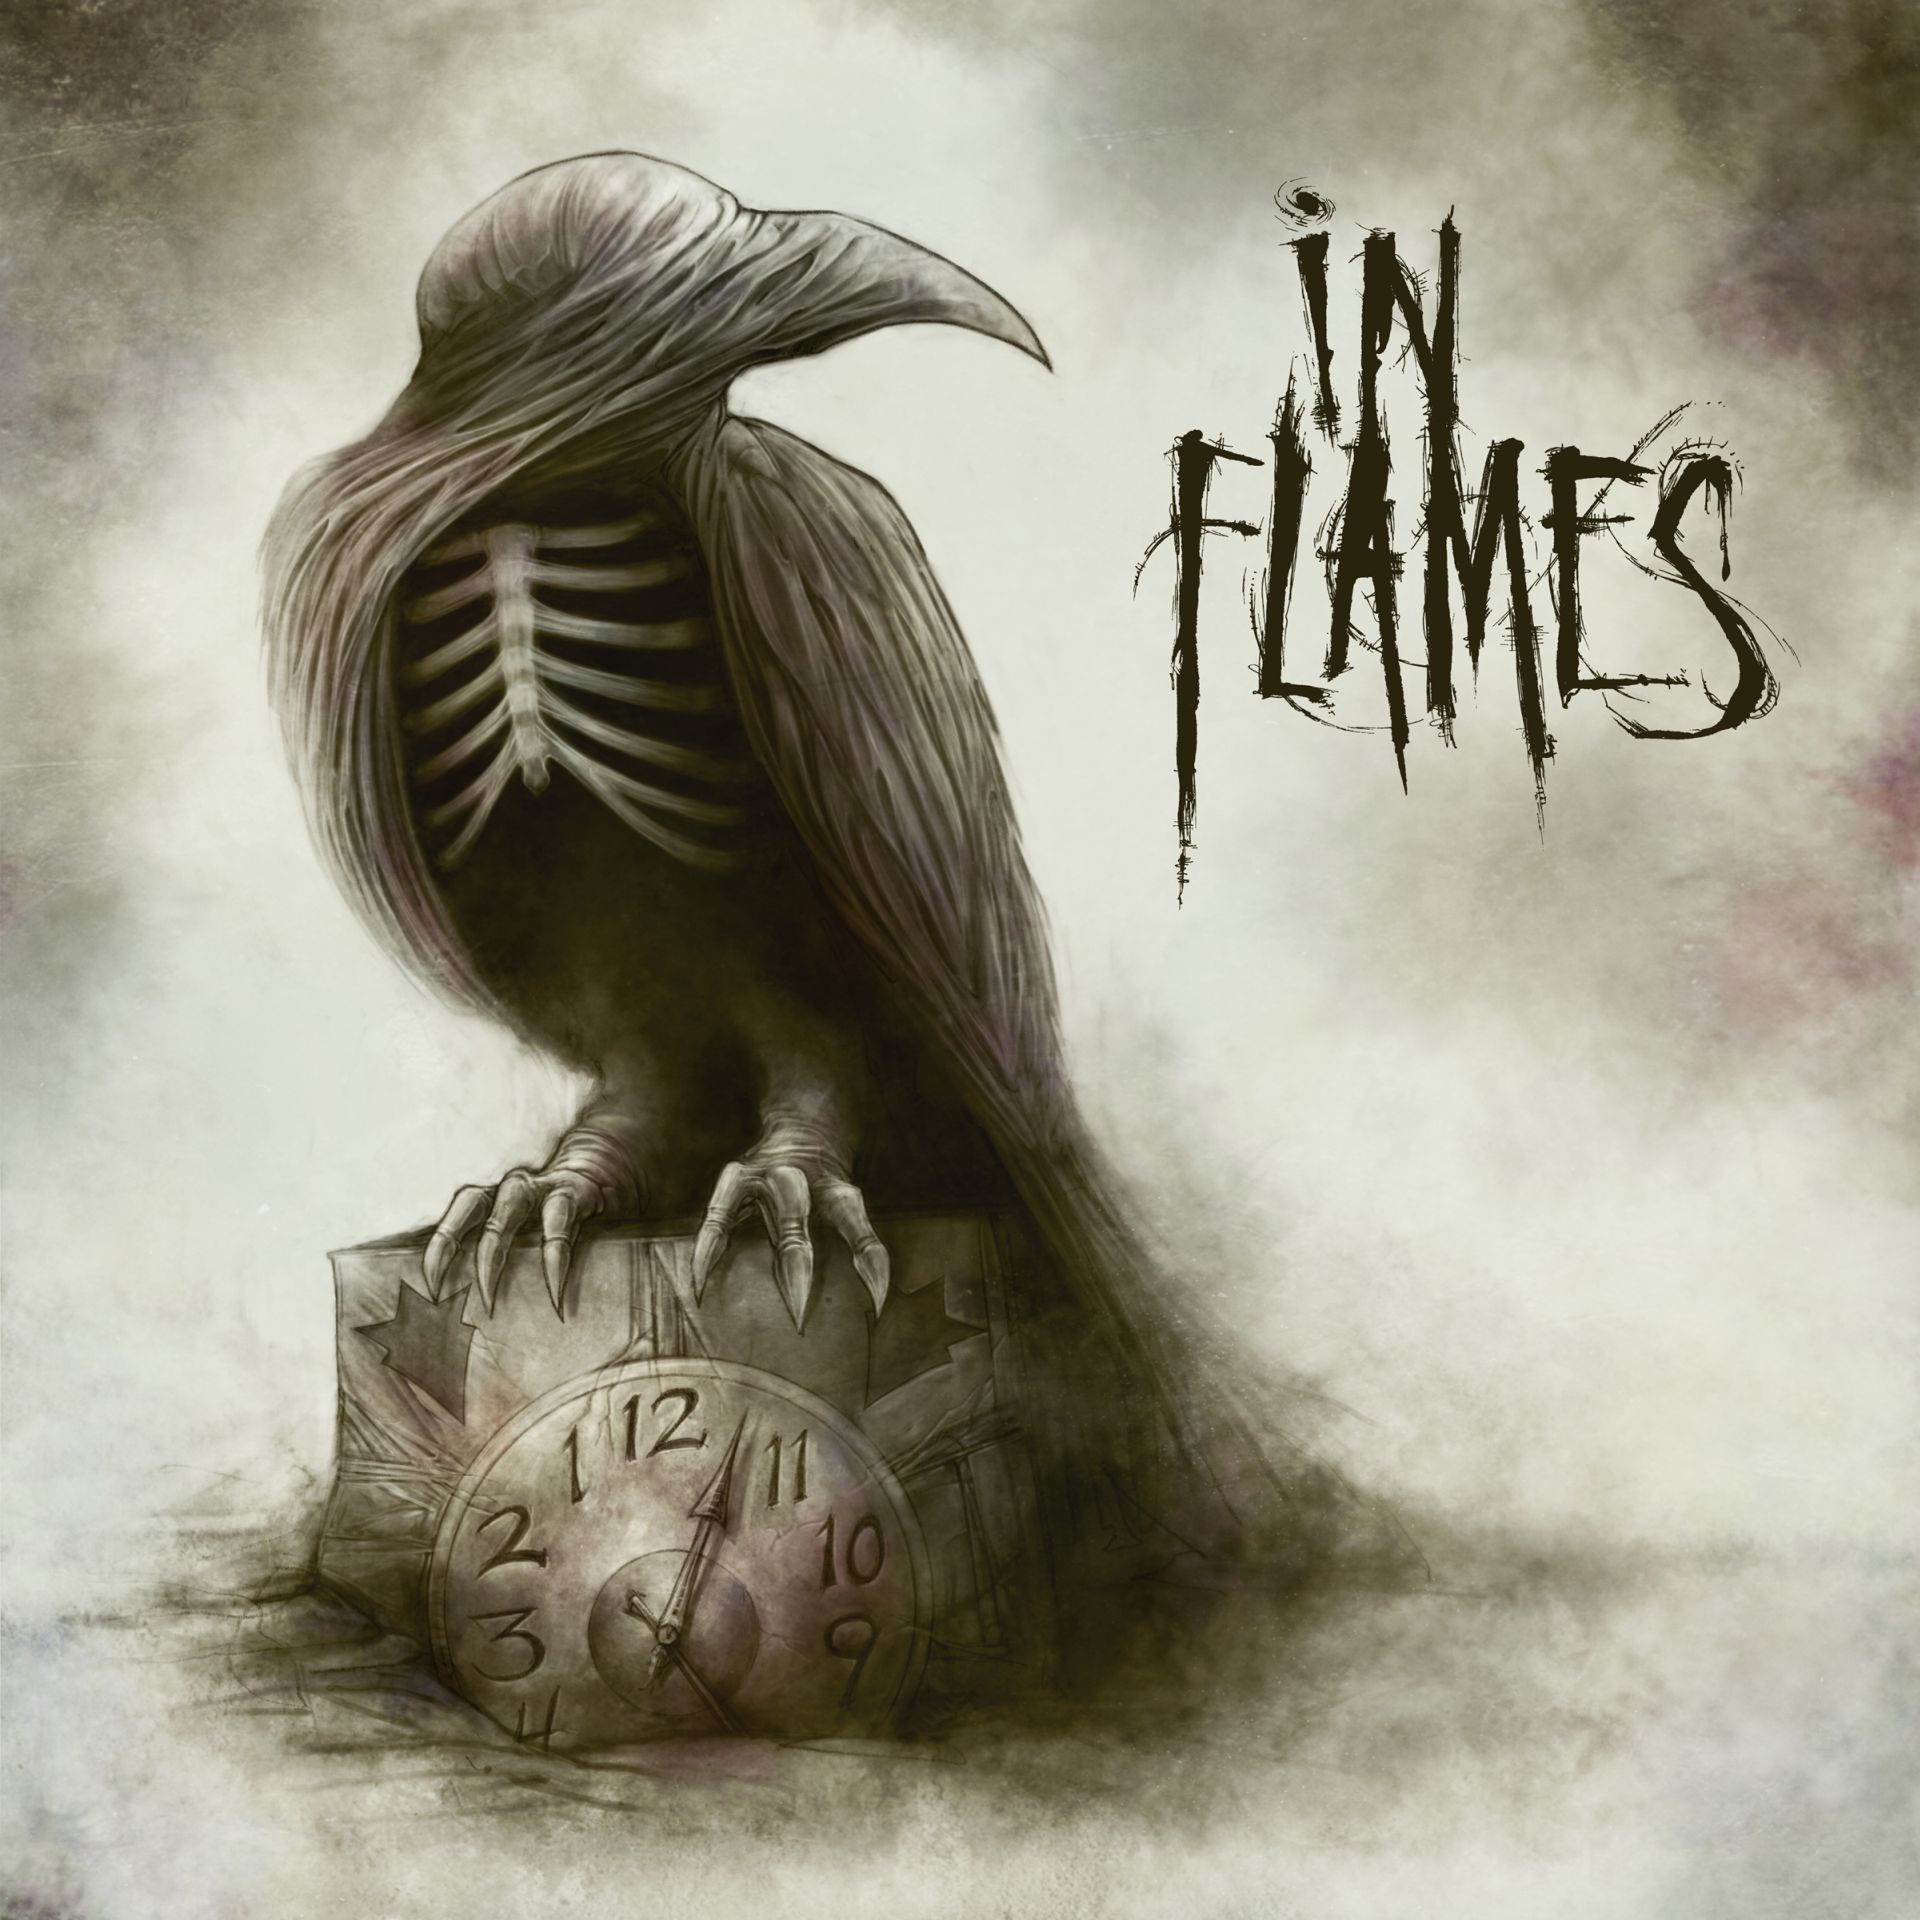 music, In Flames, album covers - desktop wallpaper